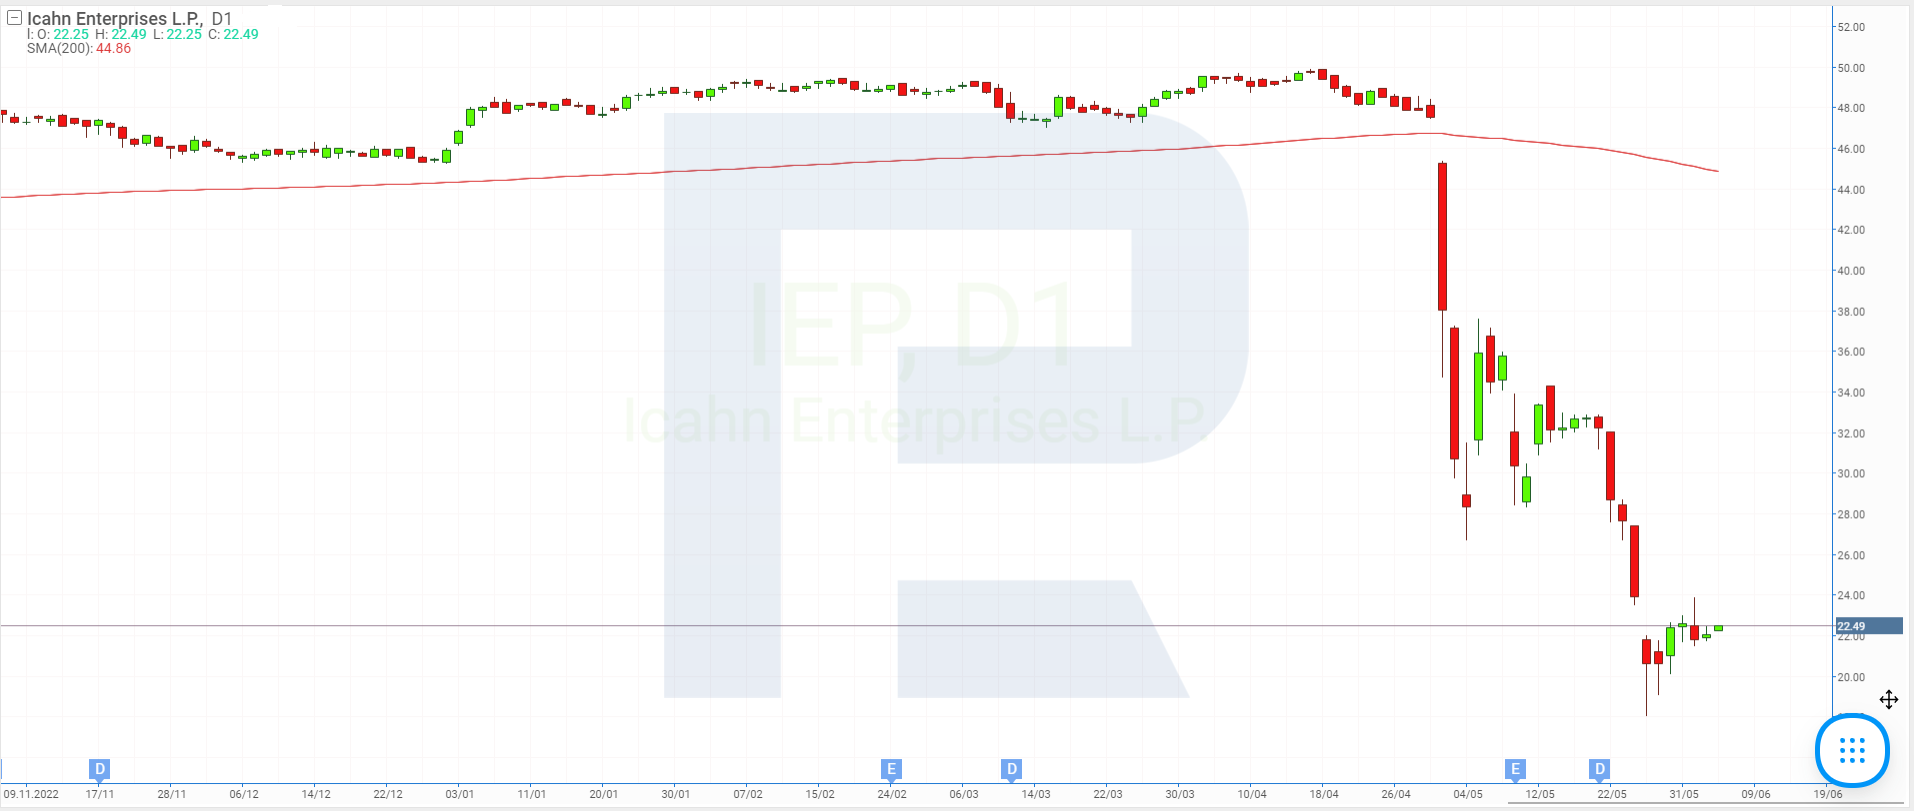 Stock price chart of Icahn Enterprises L.P.